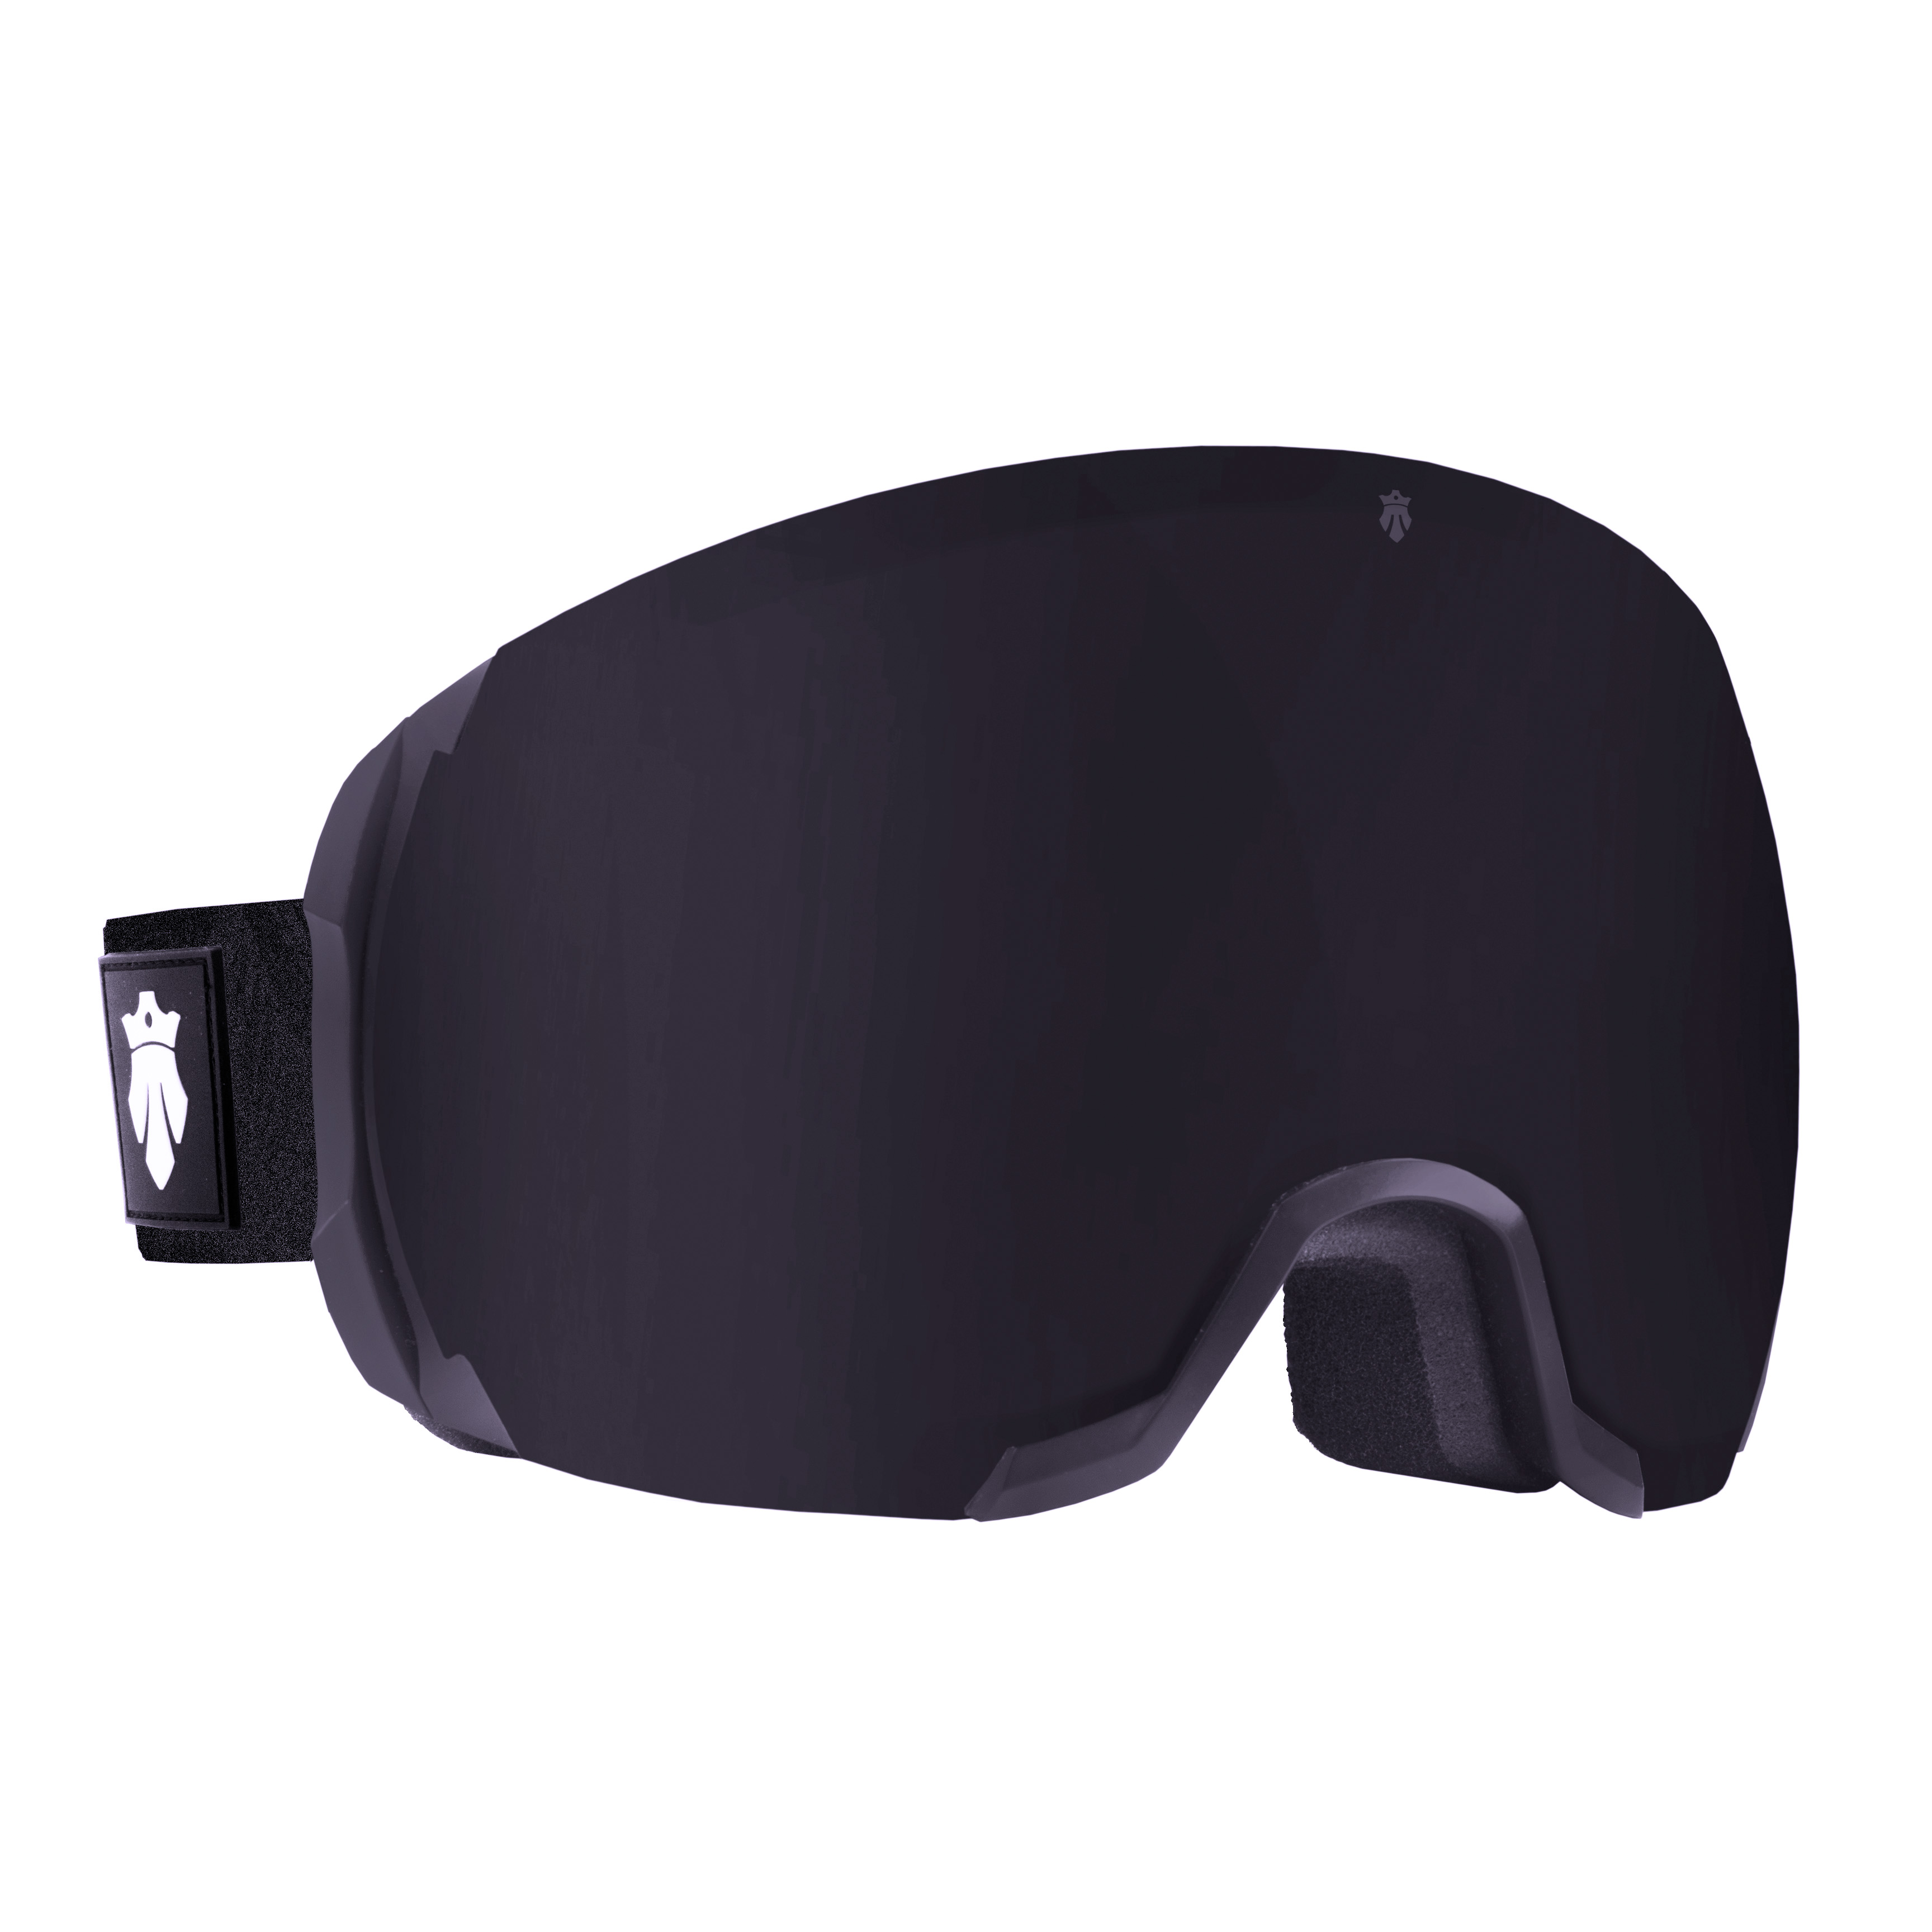 Gogle narciarskie MAJESTY Hypervision black / black pearl